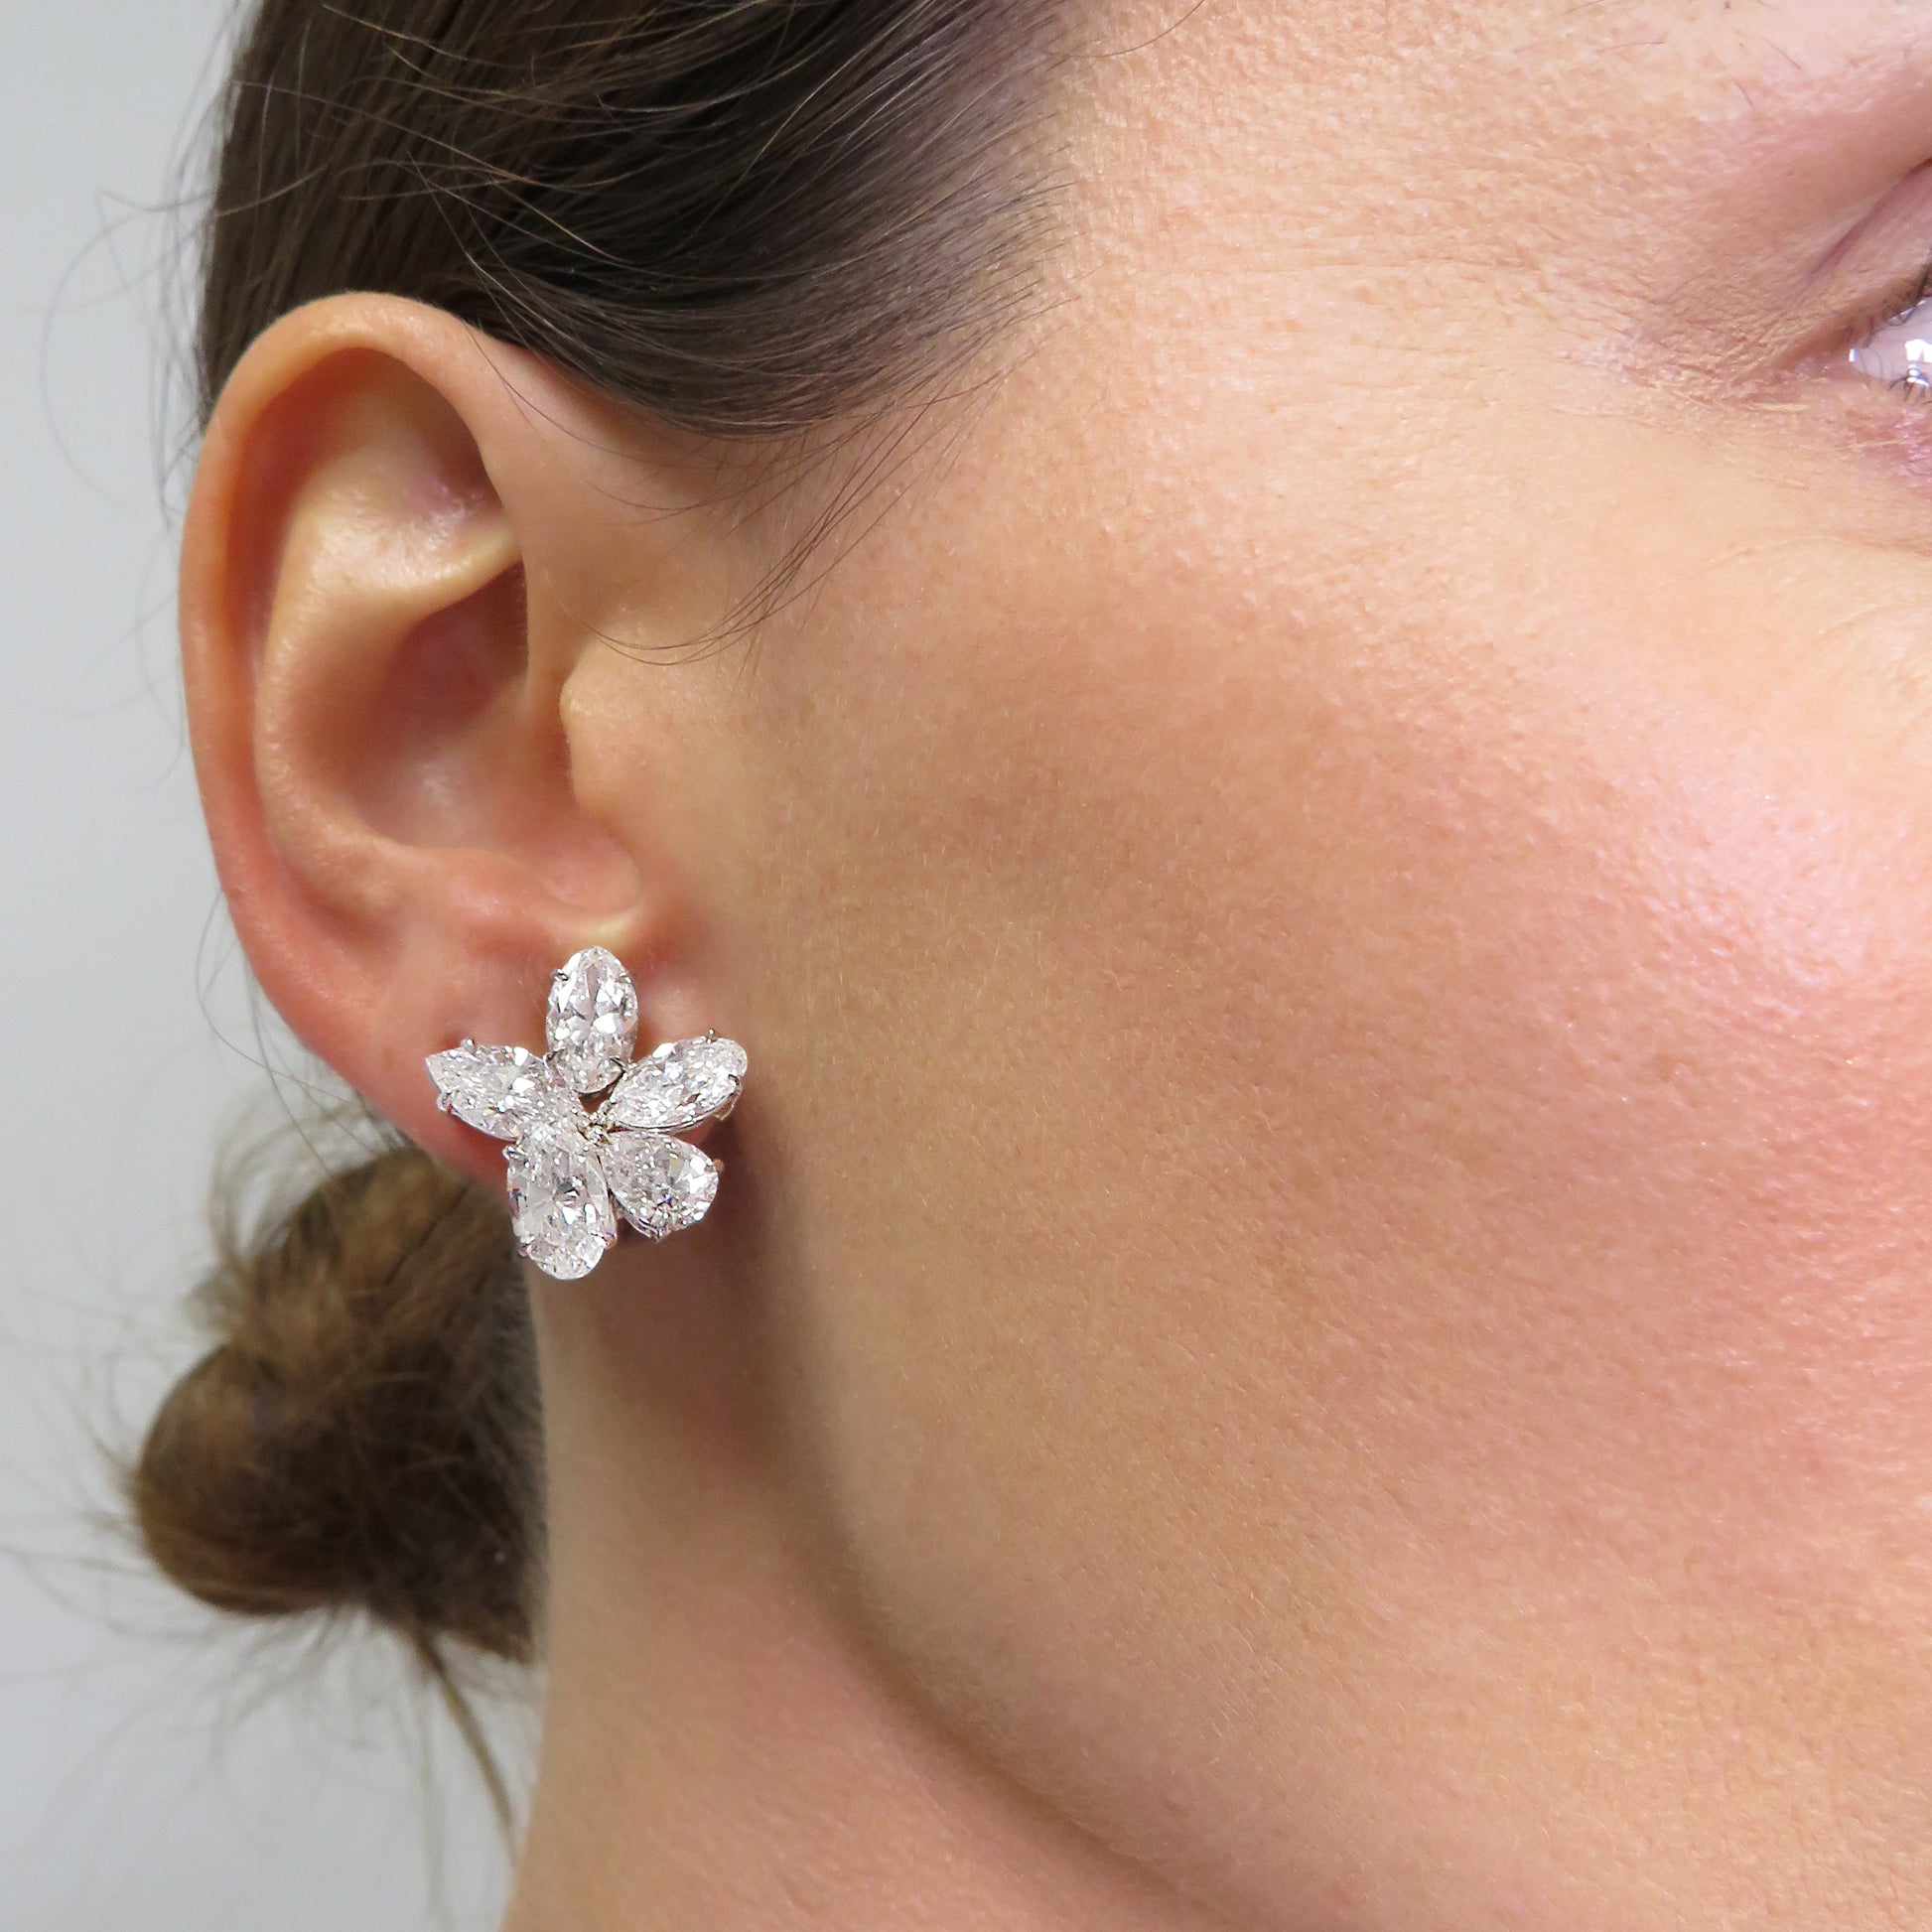 1970s Platinum Diamond Cluster Earrings worn on ear